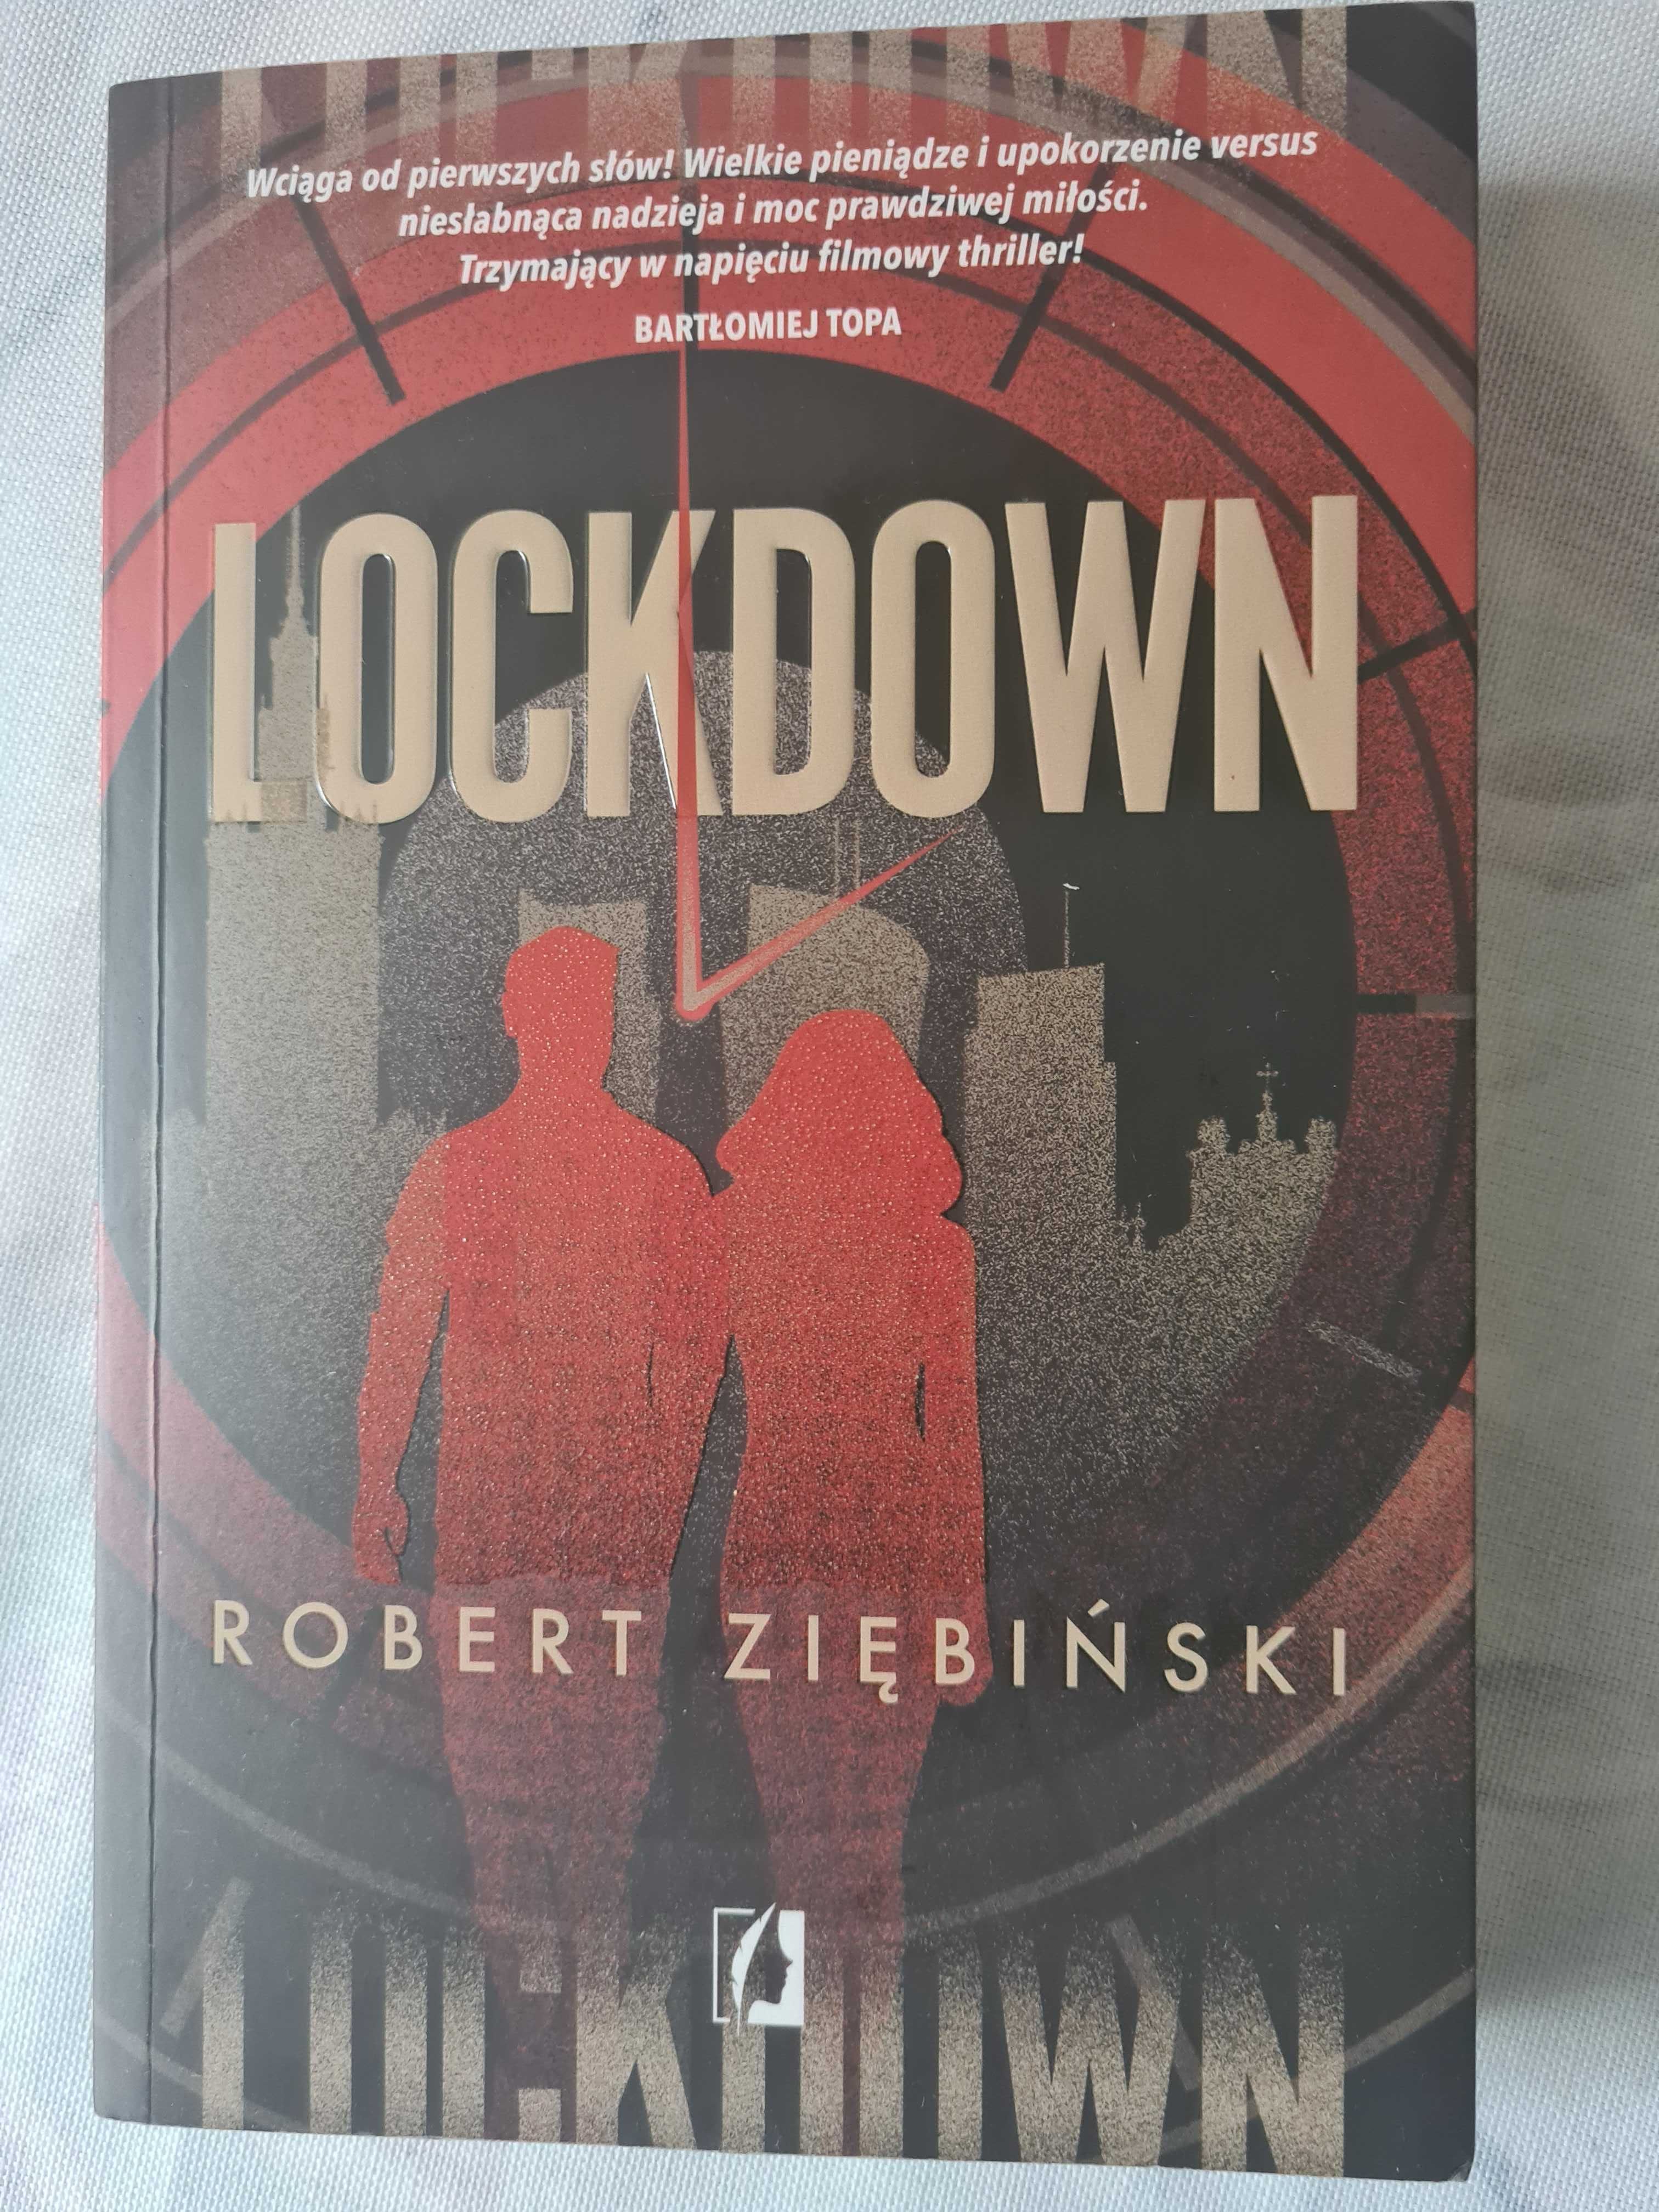 Robert Ziębiński, Lockdown